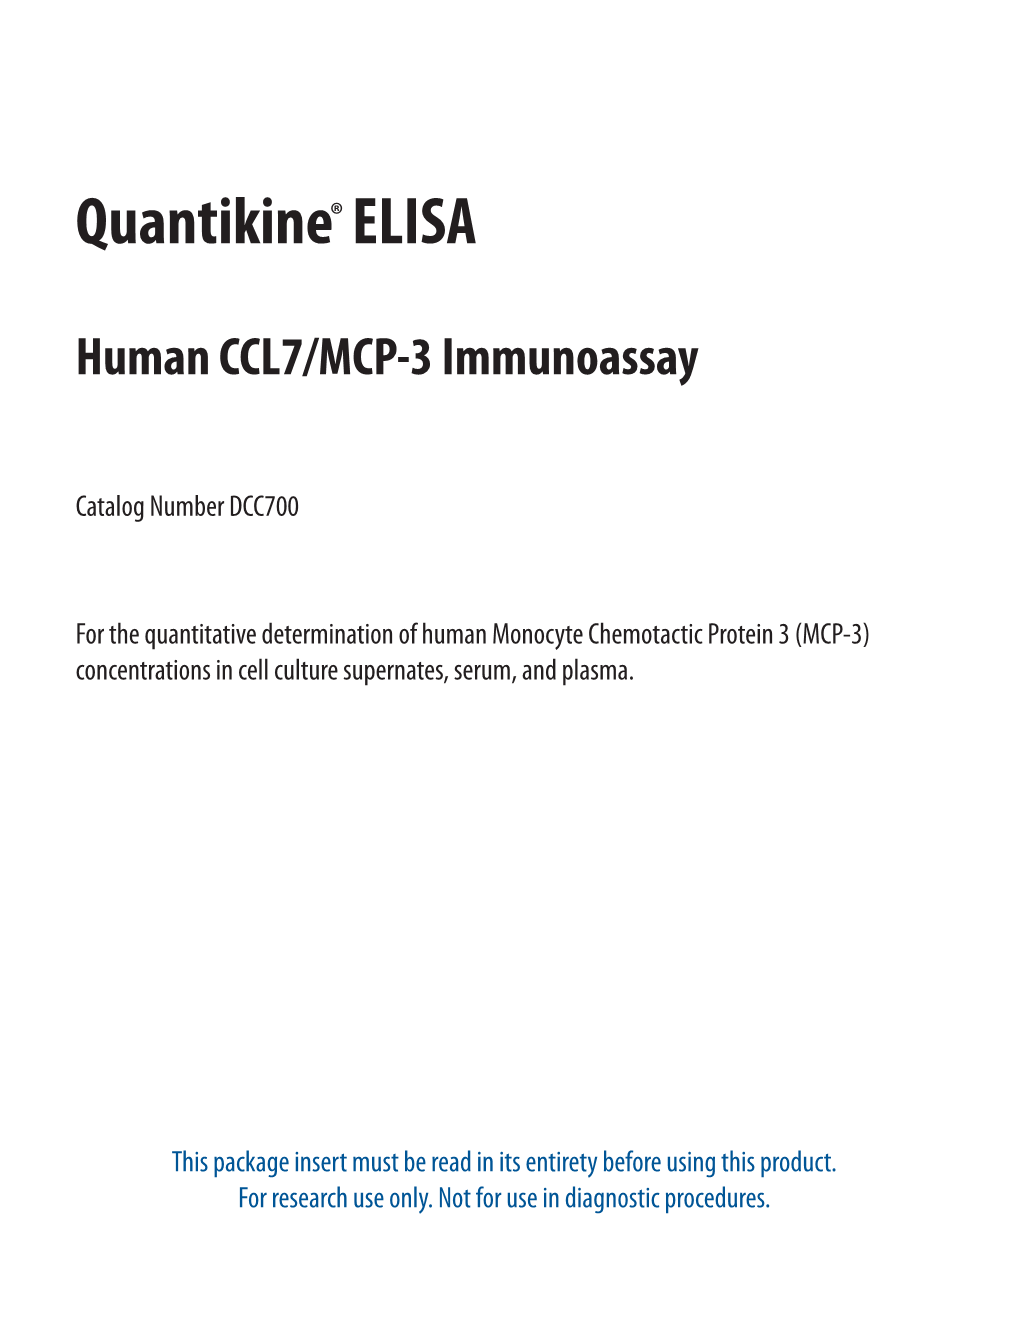 Human CCL7/MCP-3 Quantikine ELISA